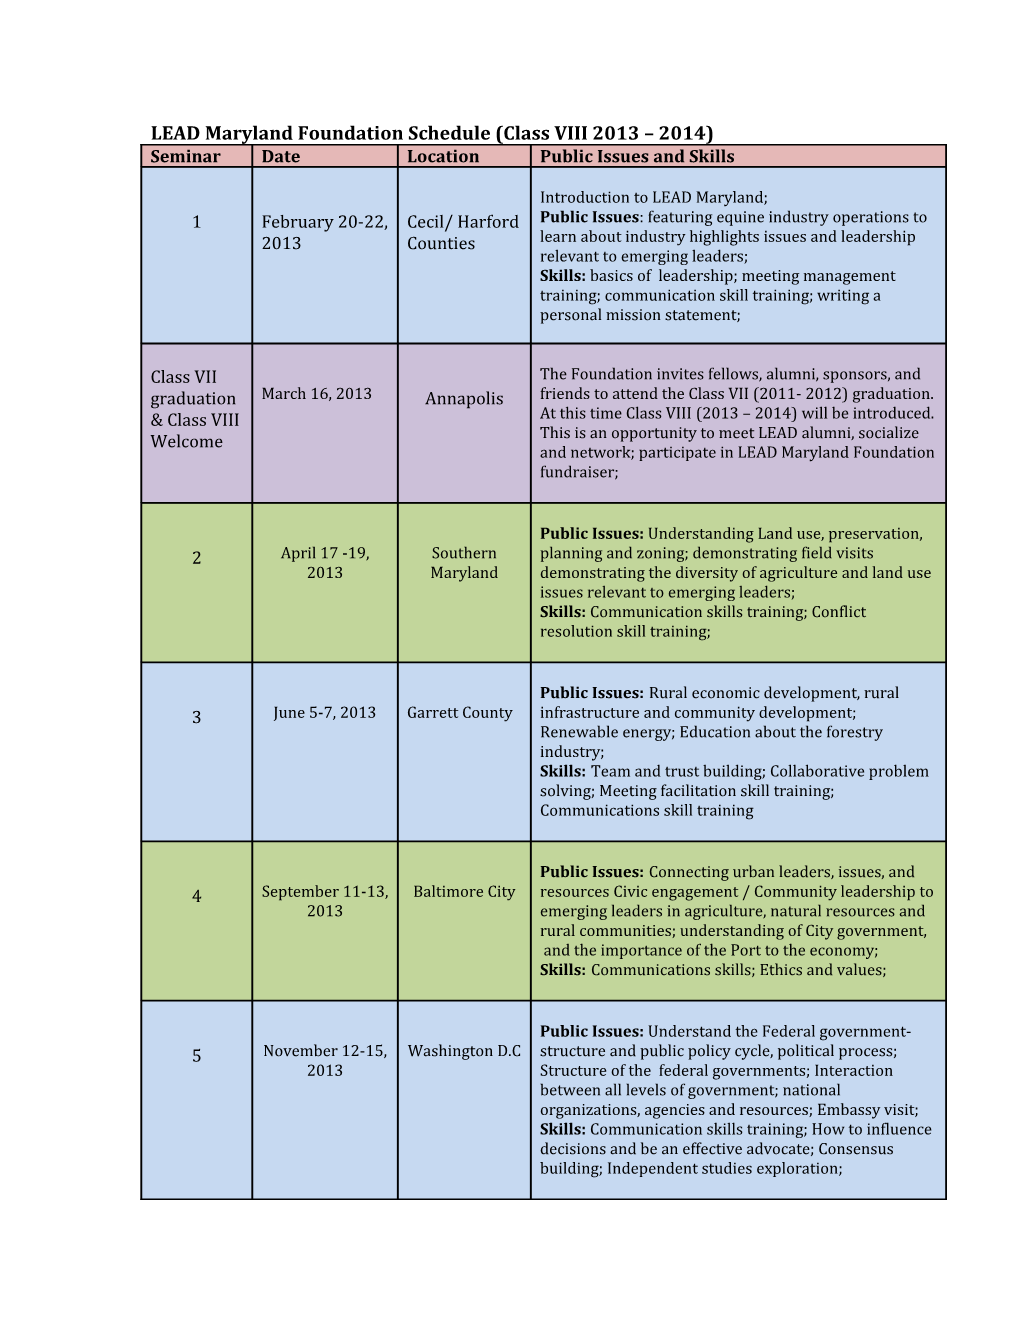 LEAD Maryland Foundation Schedule (Class VIII 2013 2014)